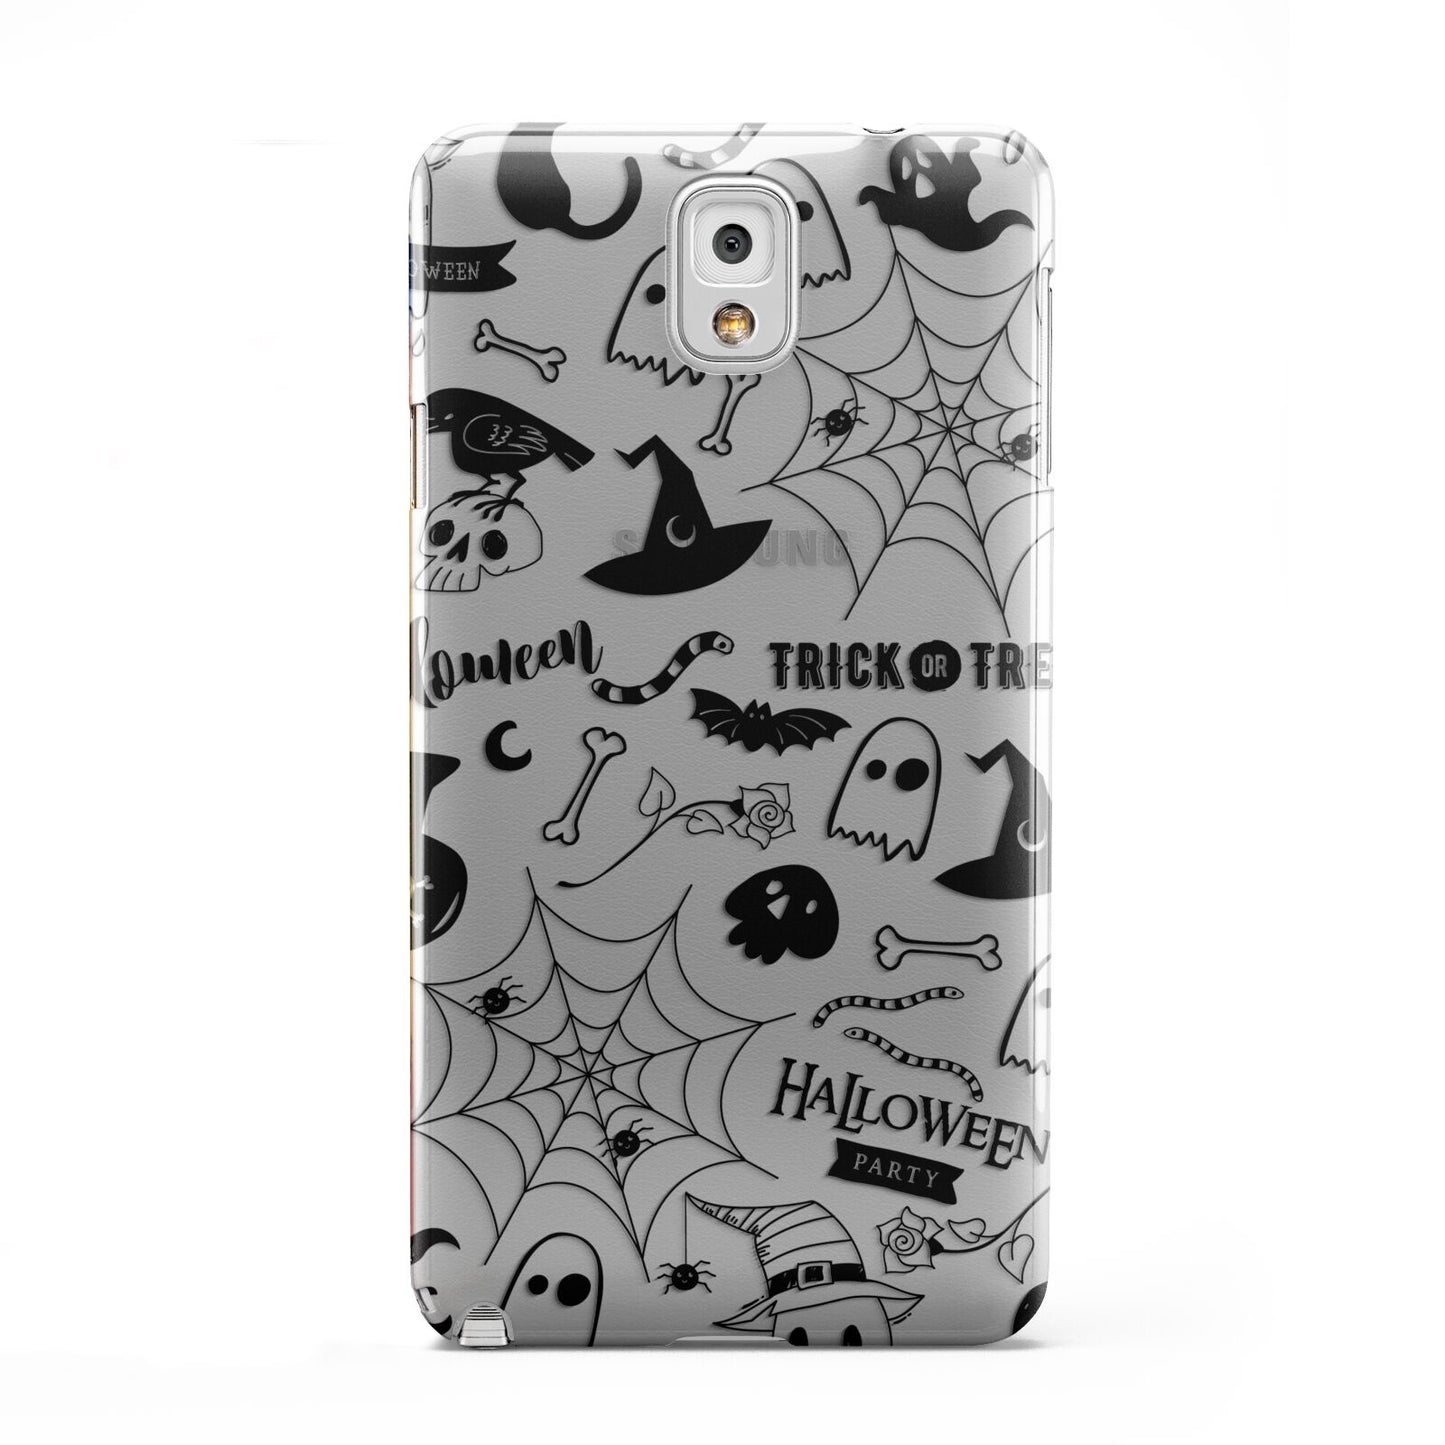 Monochrome Halloween Illustrations Samsung Galaxy Note 3 Case